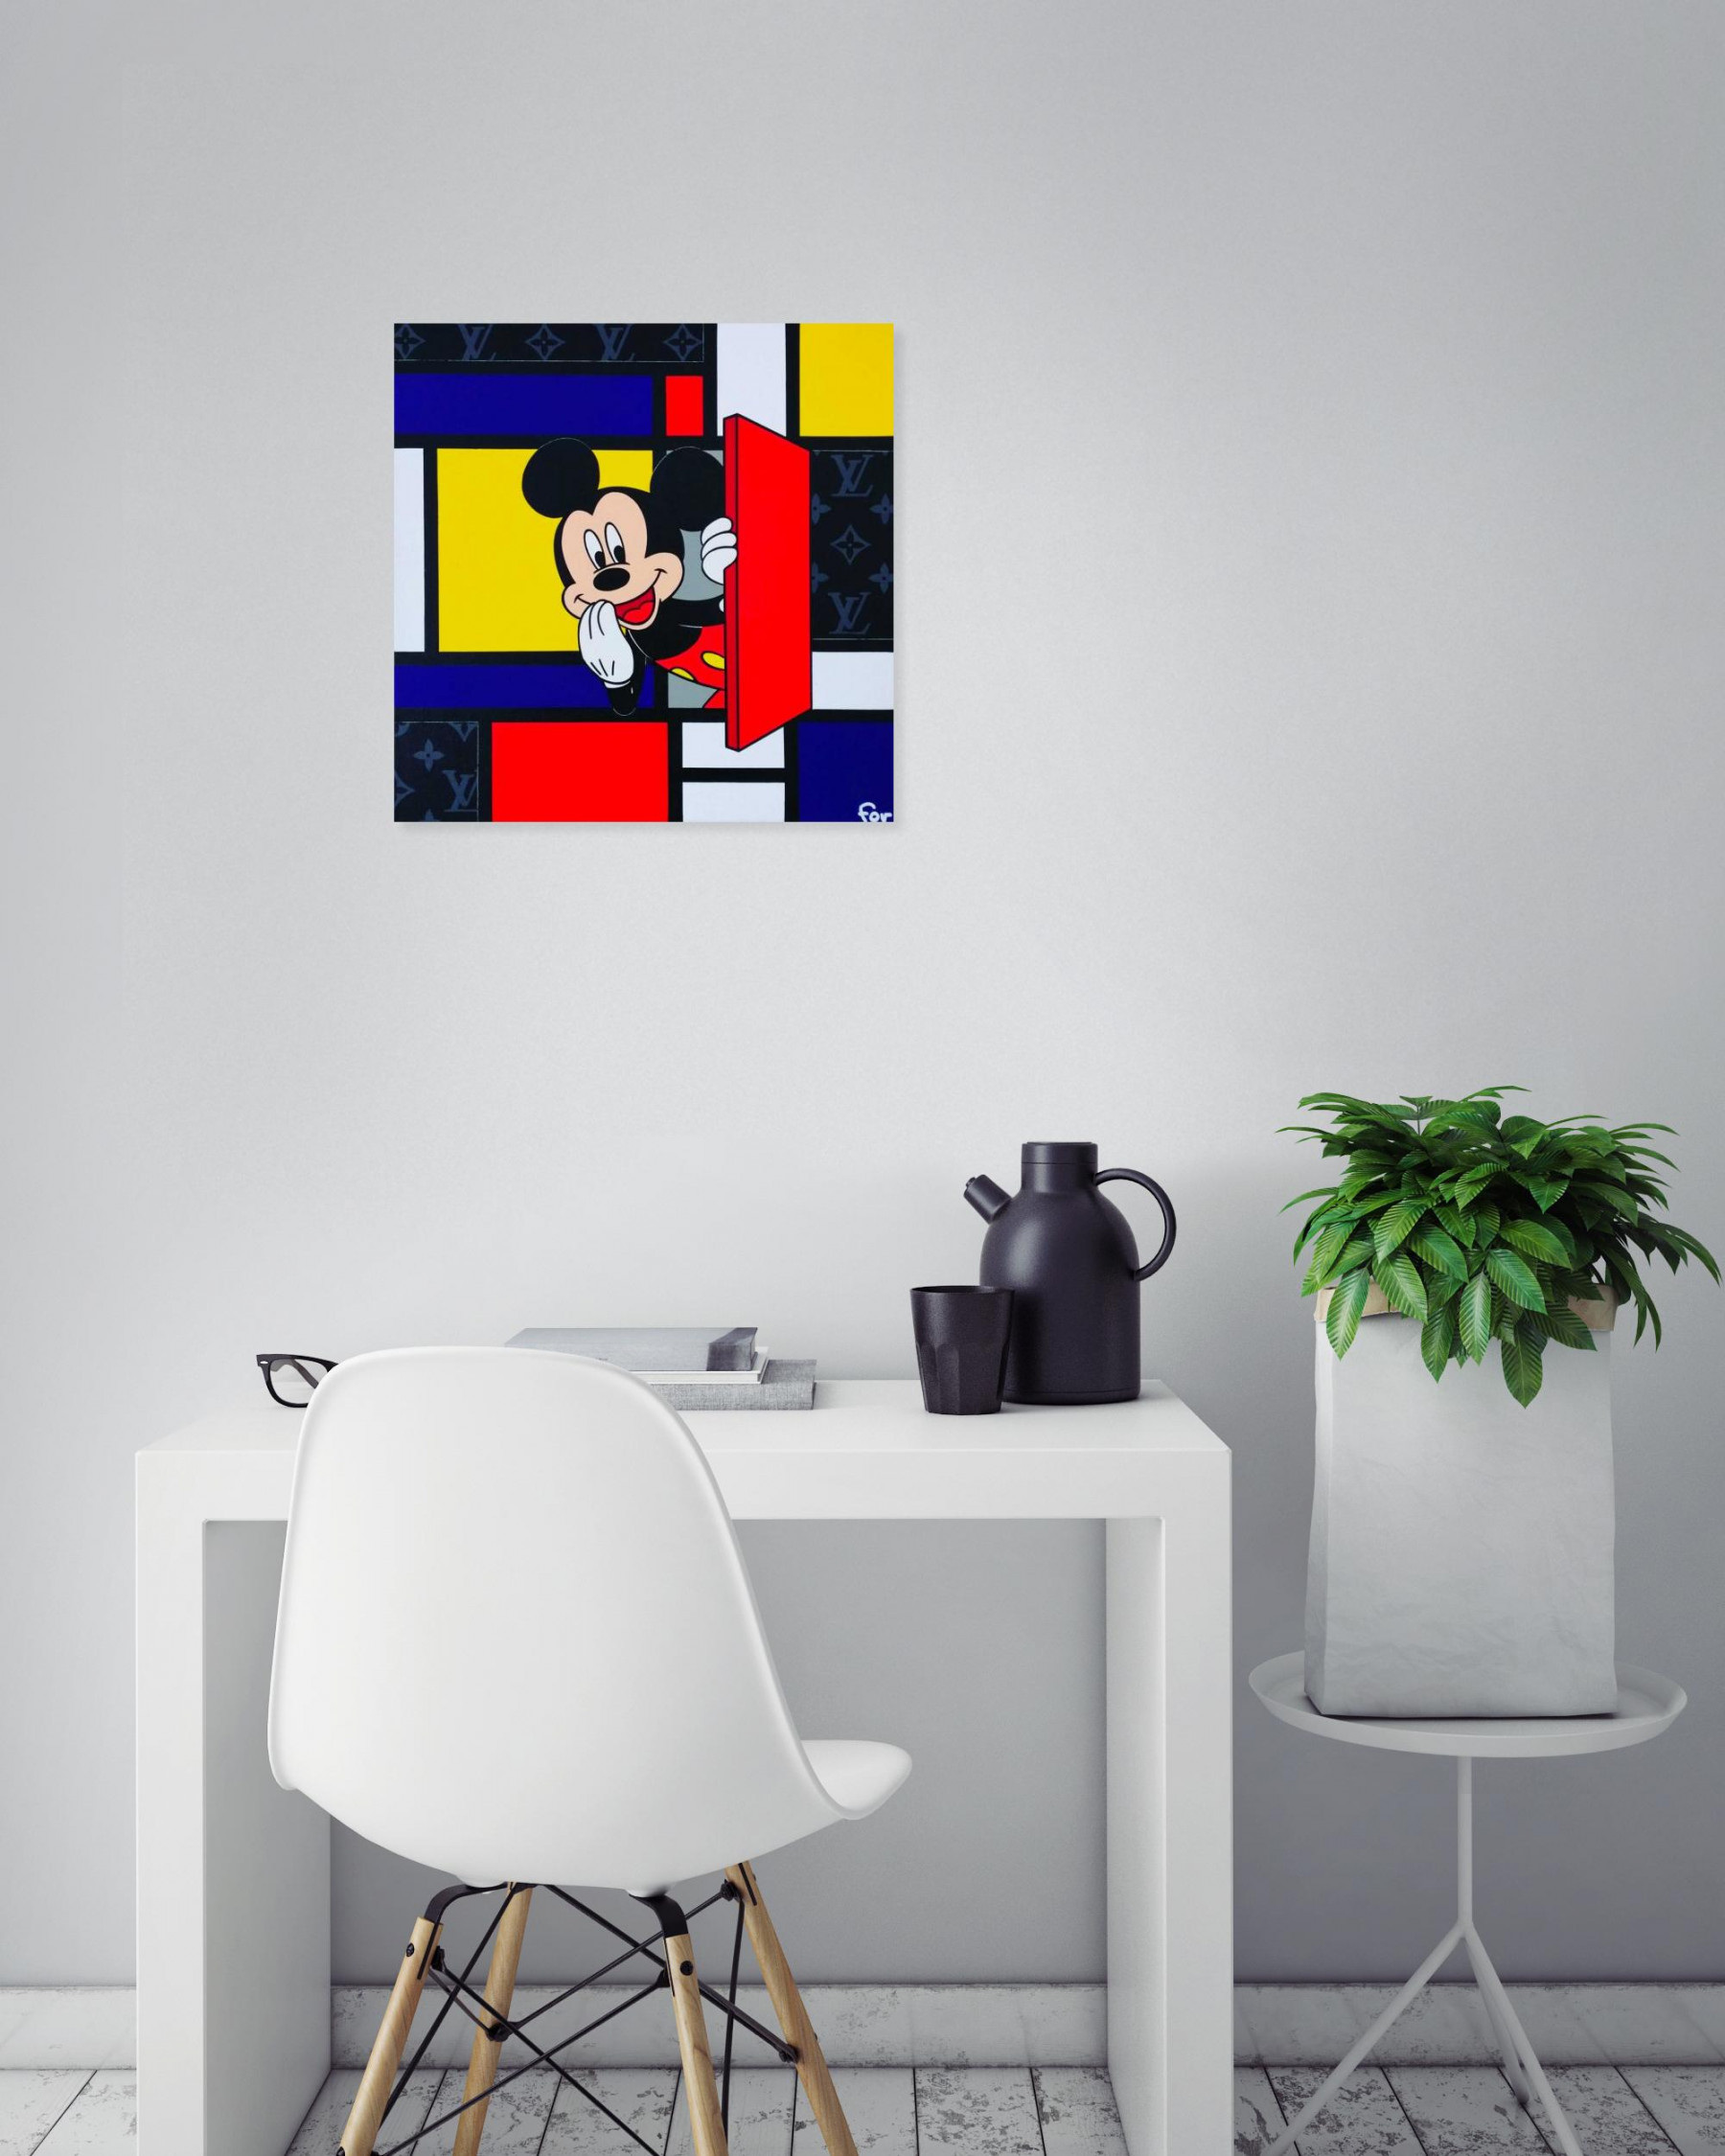 Mickey Mouse Framed Wall Art, Splash of Arts